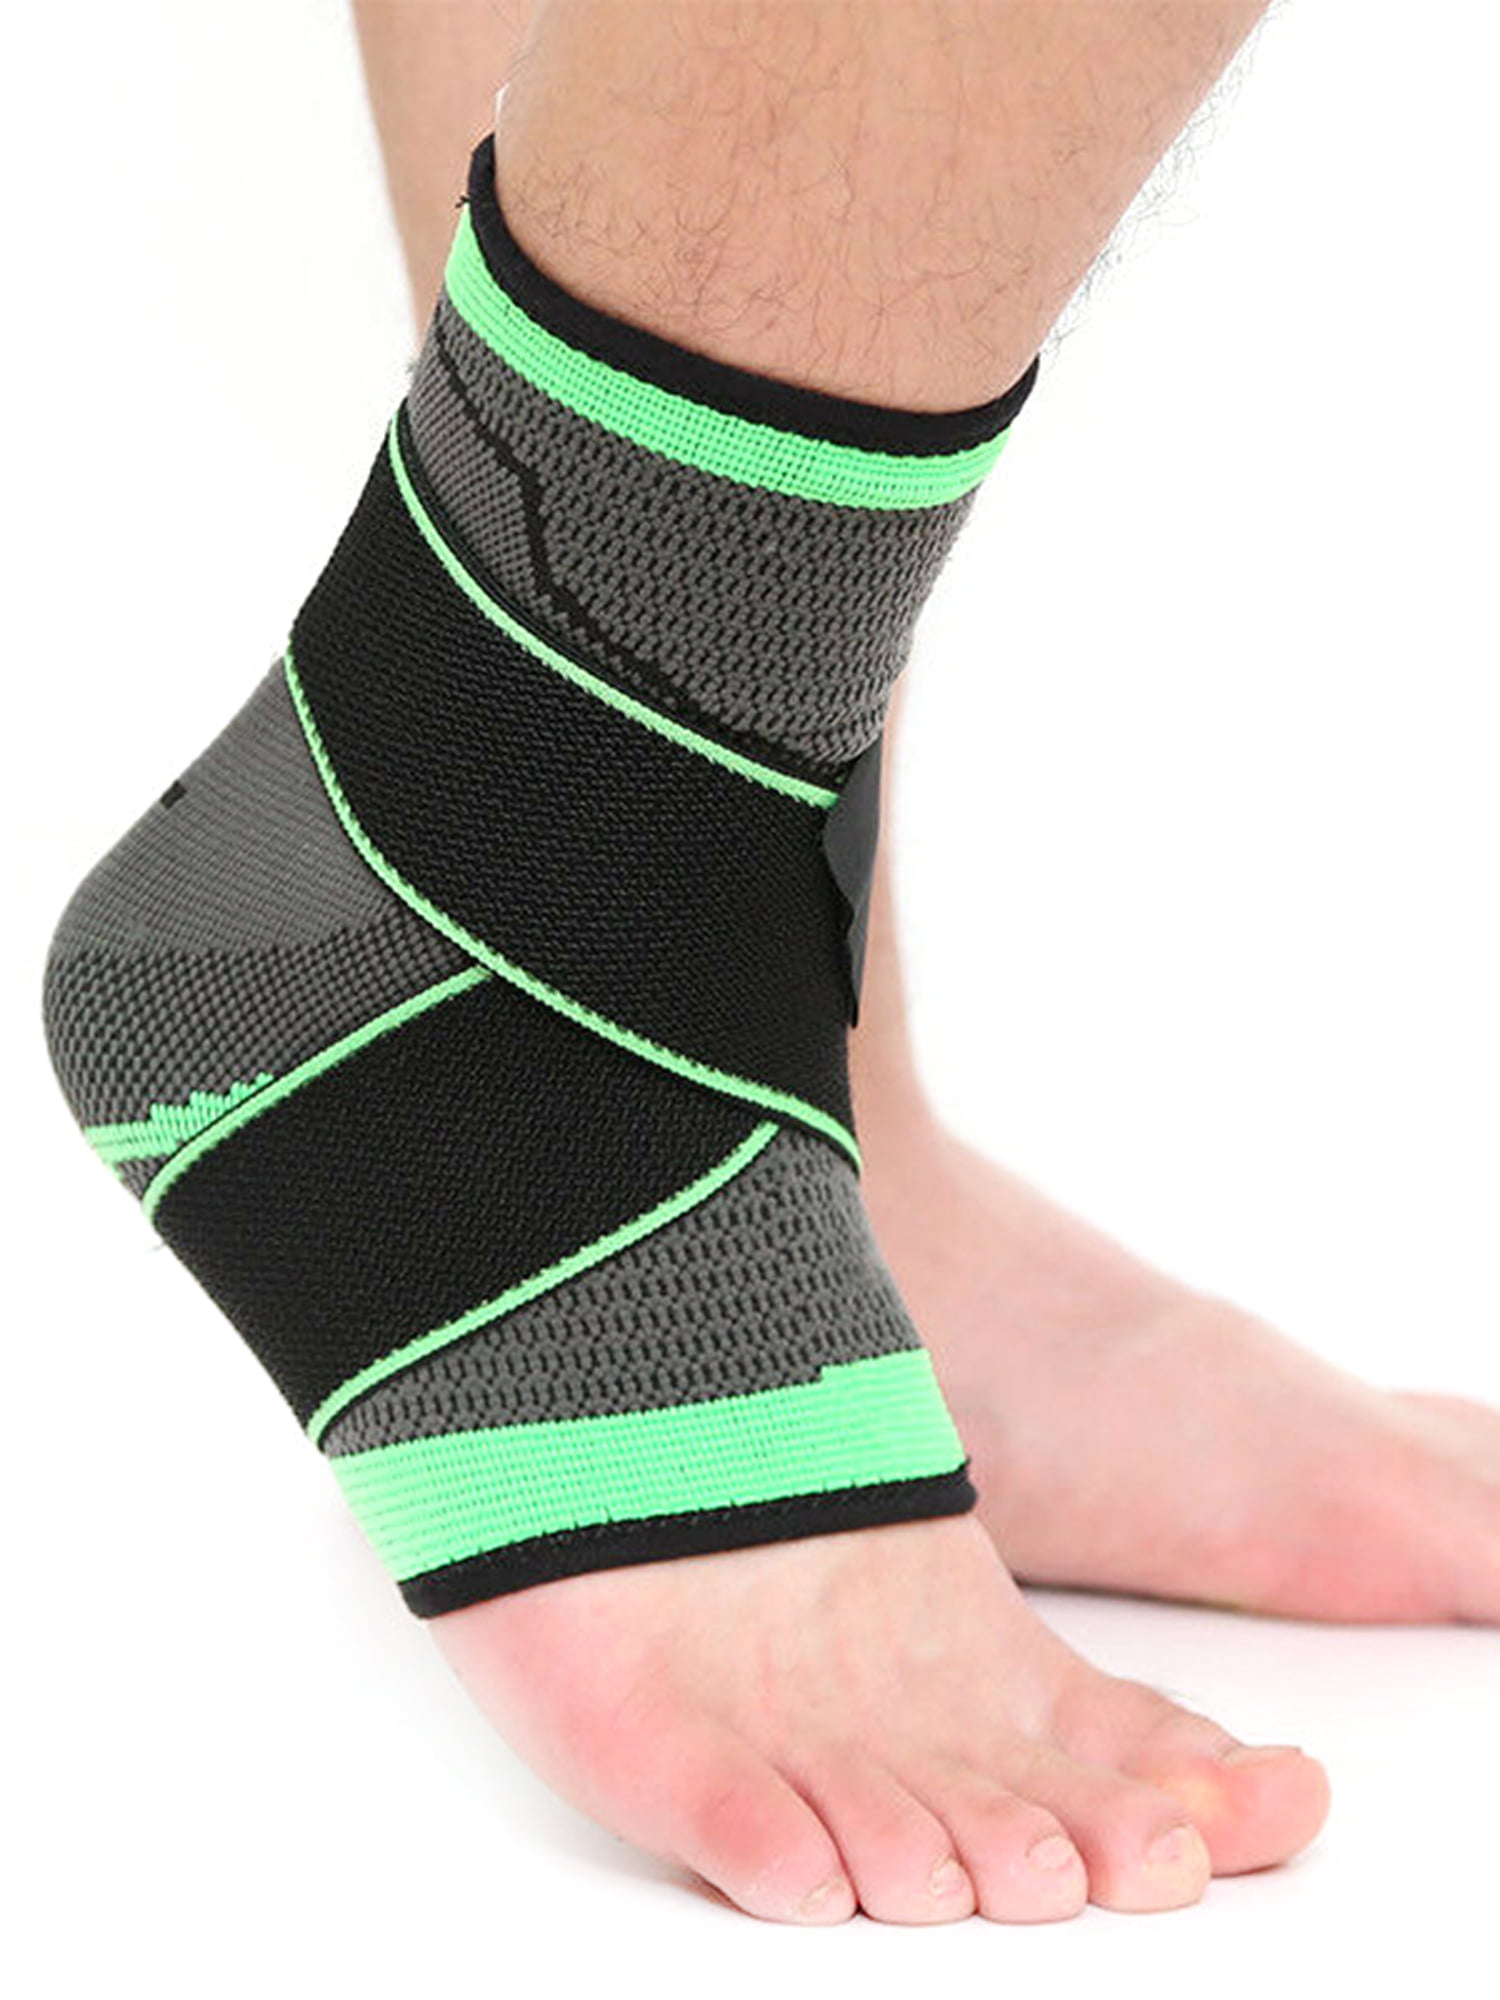 Sprains Arthritis Achilles Injuries Ankle Support Compression Foot Brace Strap 